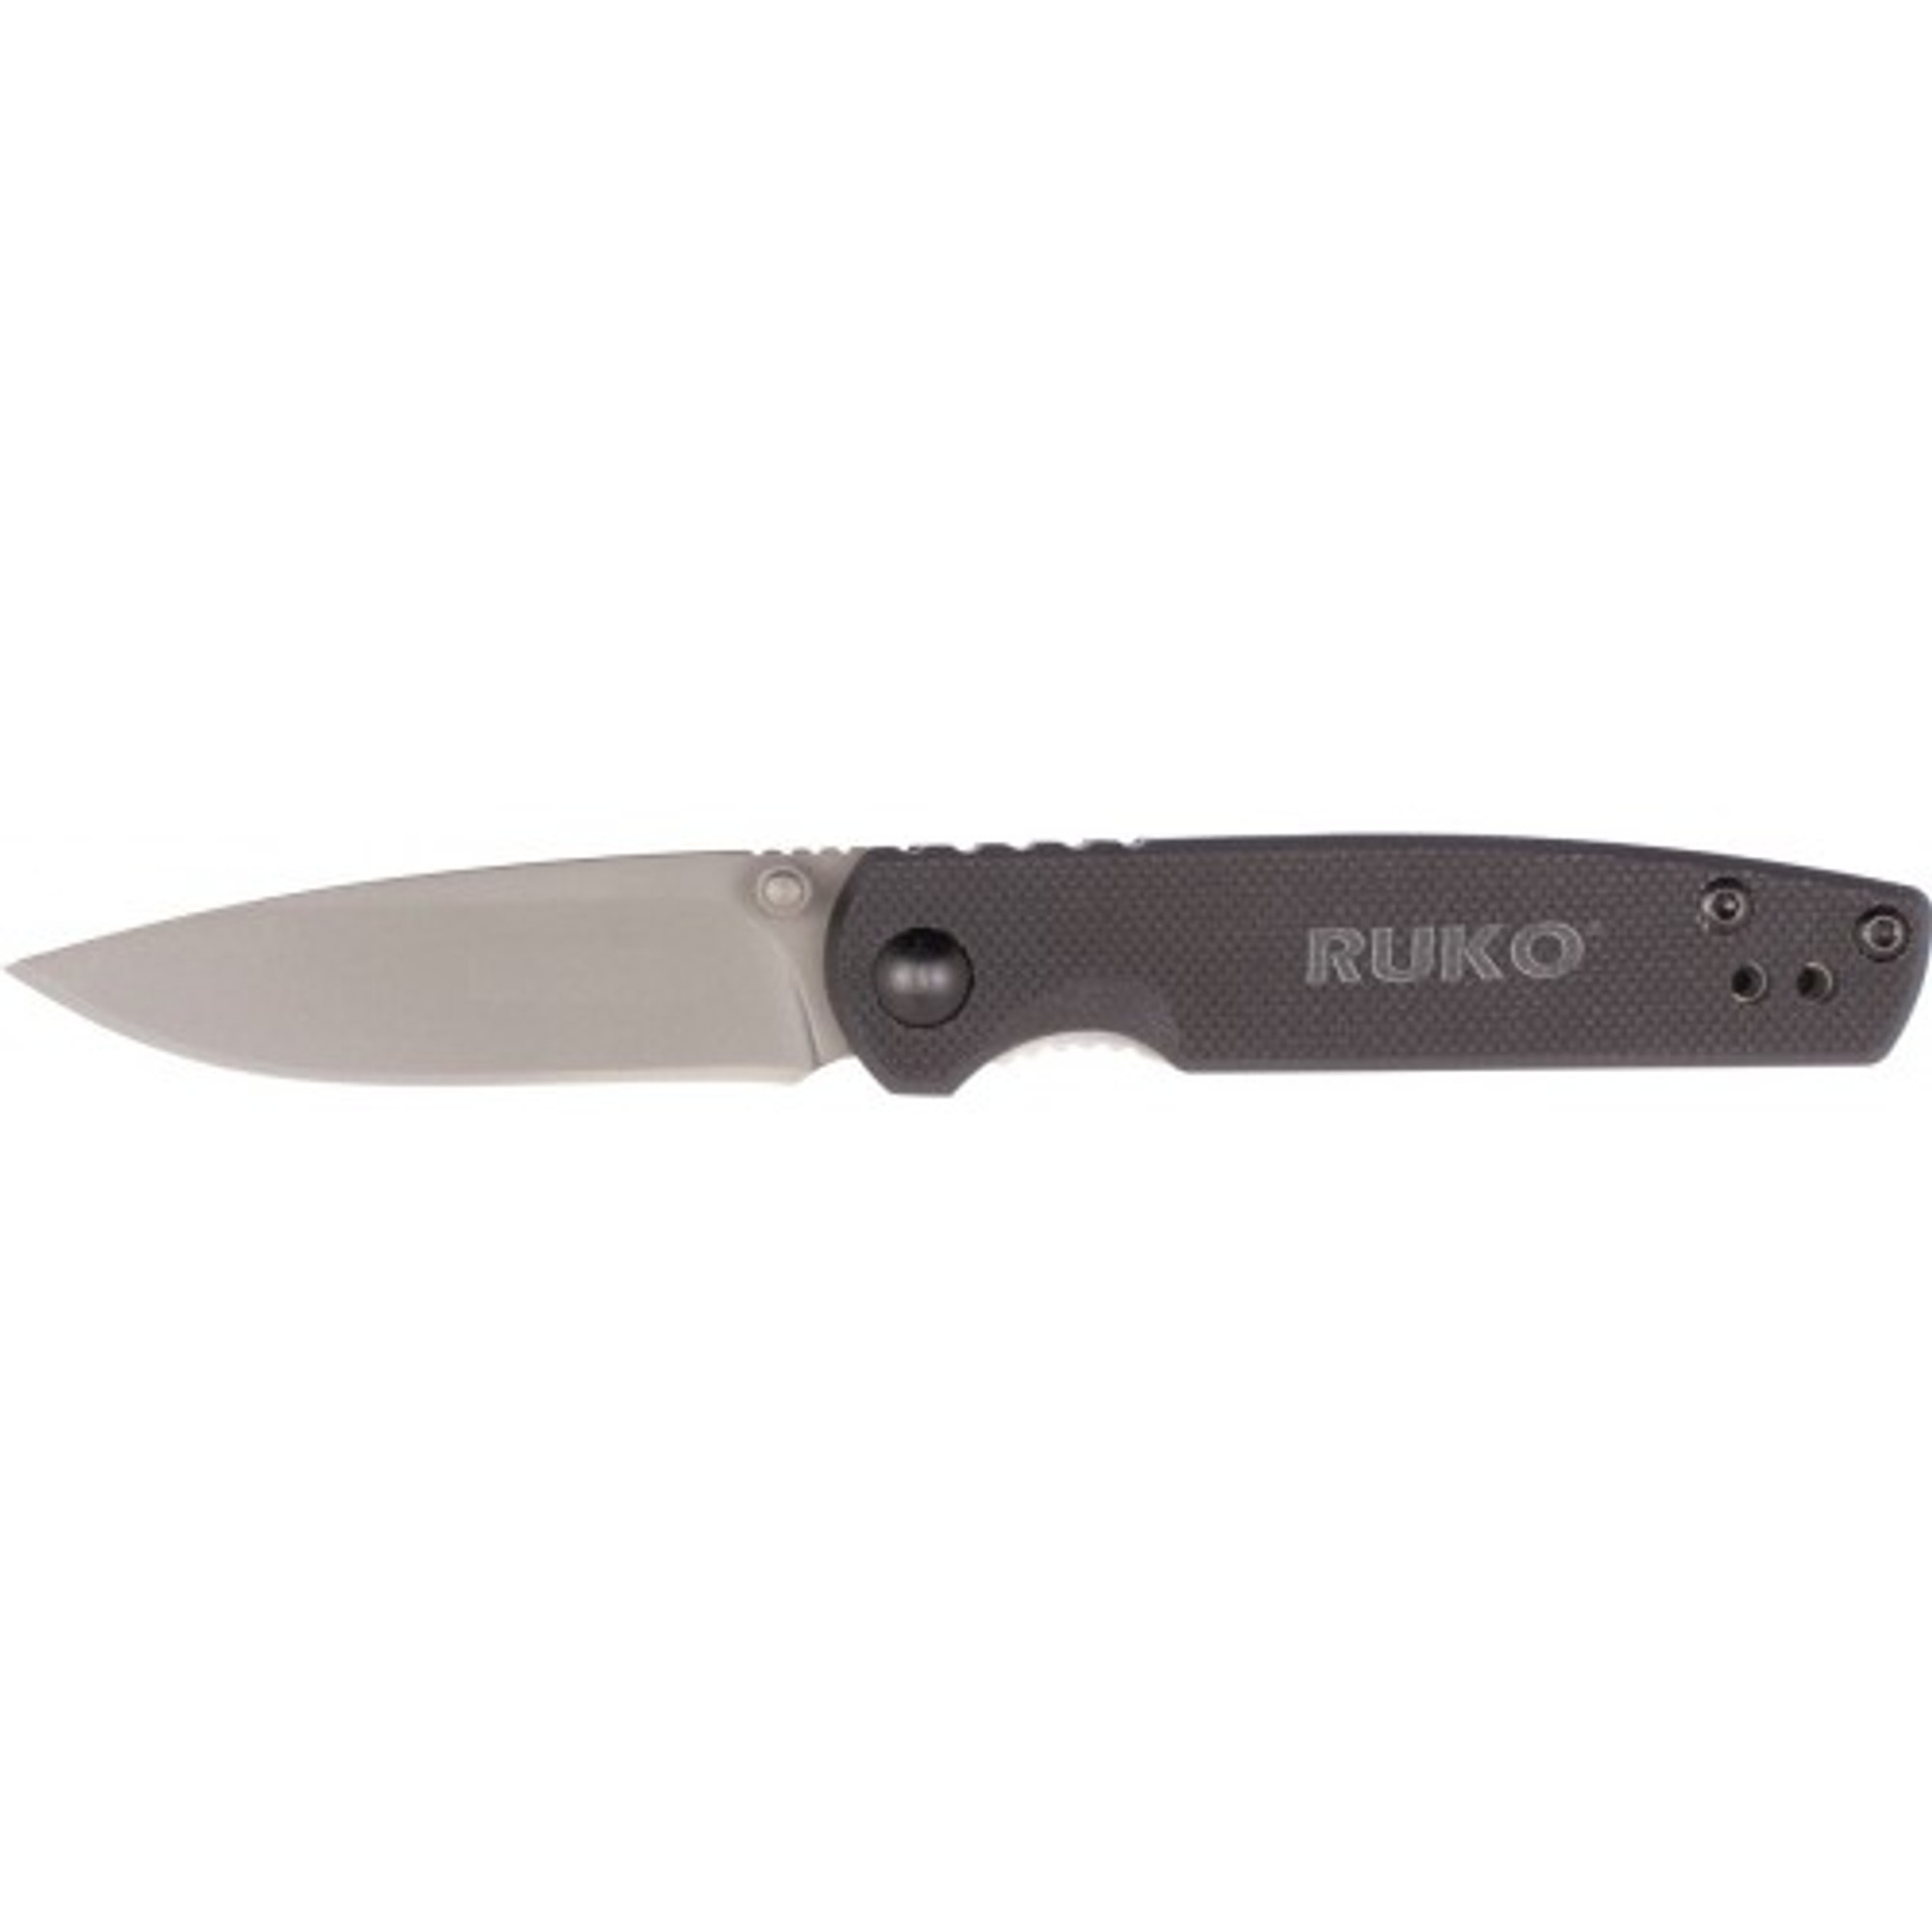 RUKO RUK0171, 440A TiN, 2" Folding Blade Pocket Knife, G10 Handle, boxed